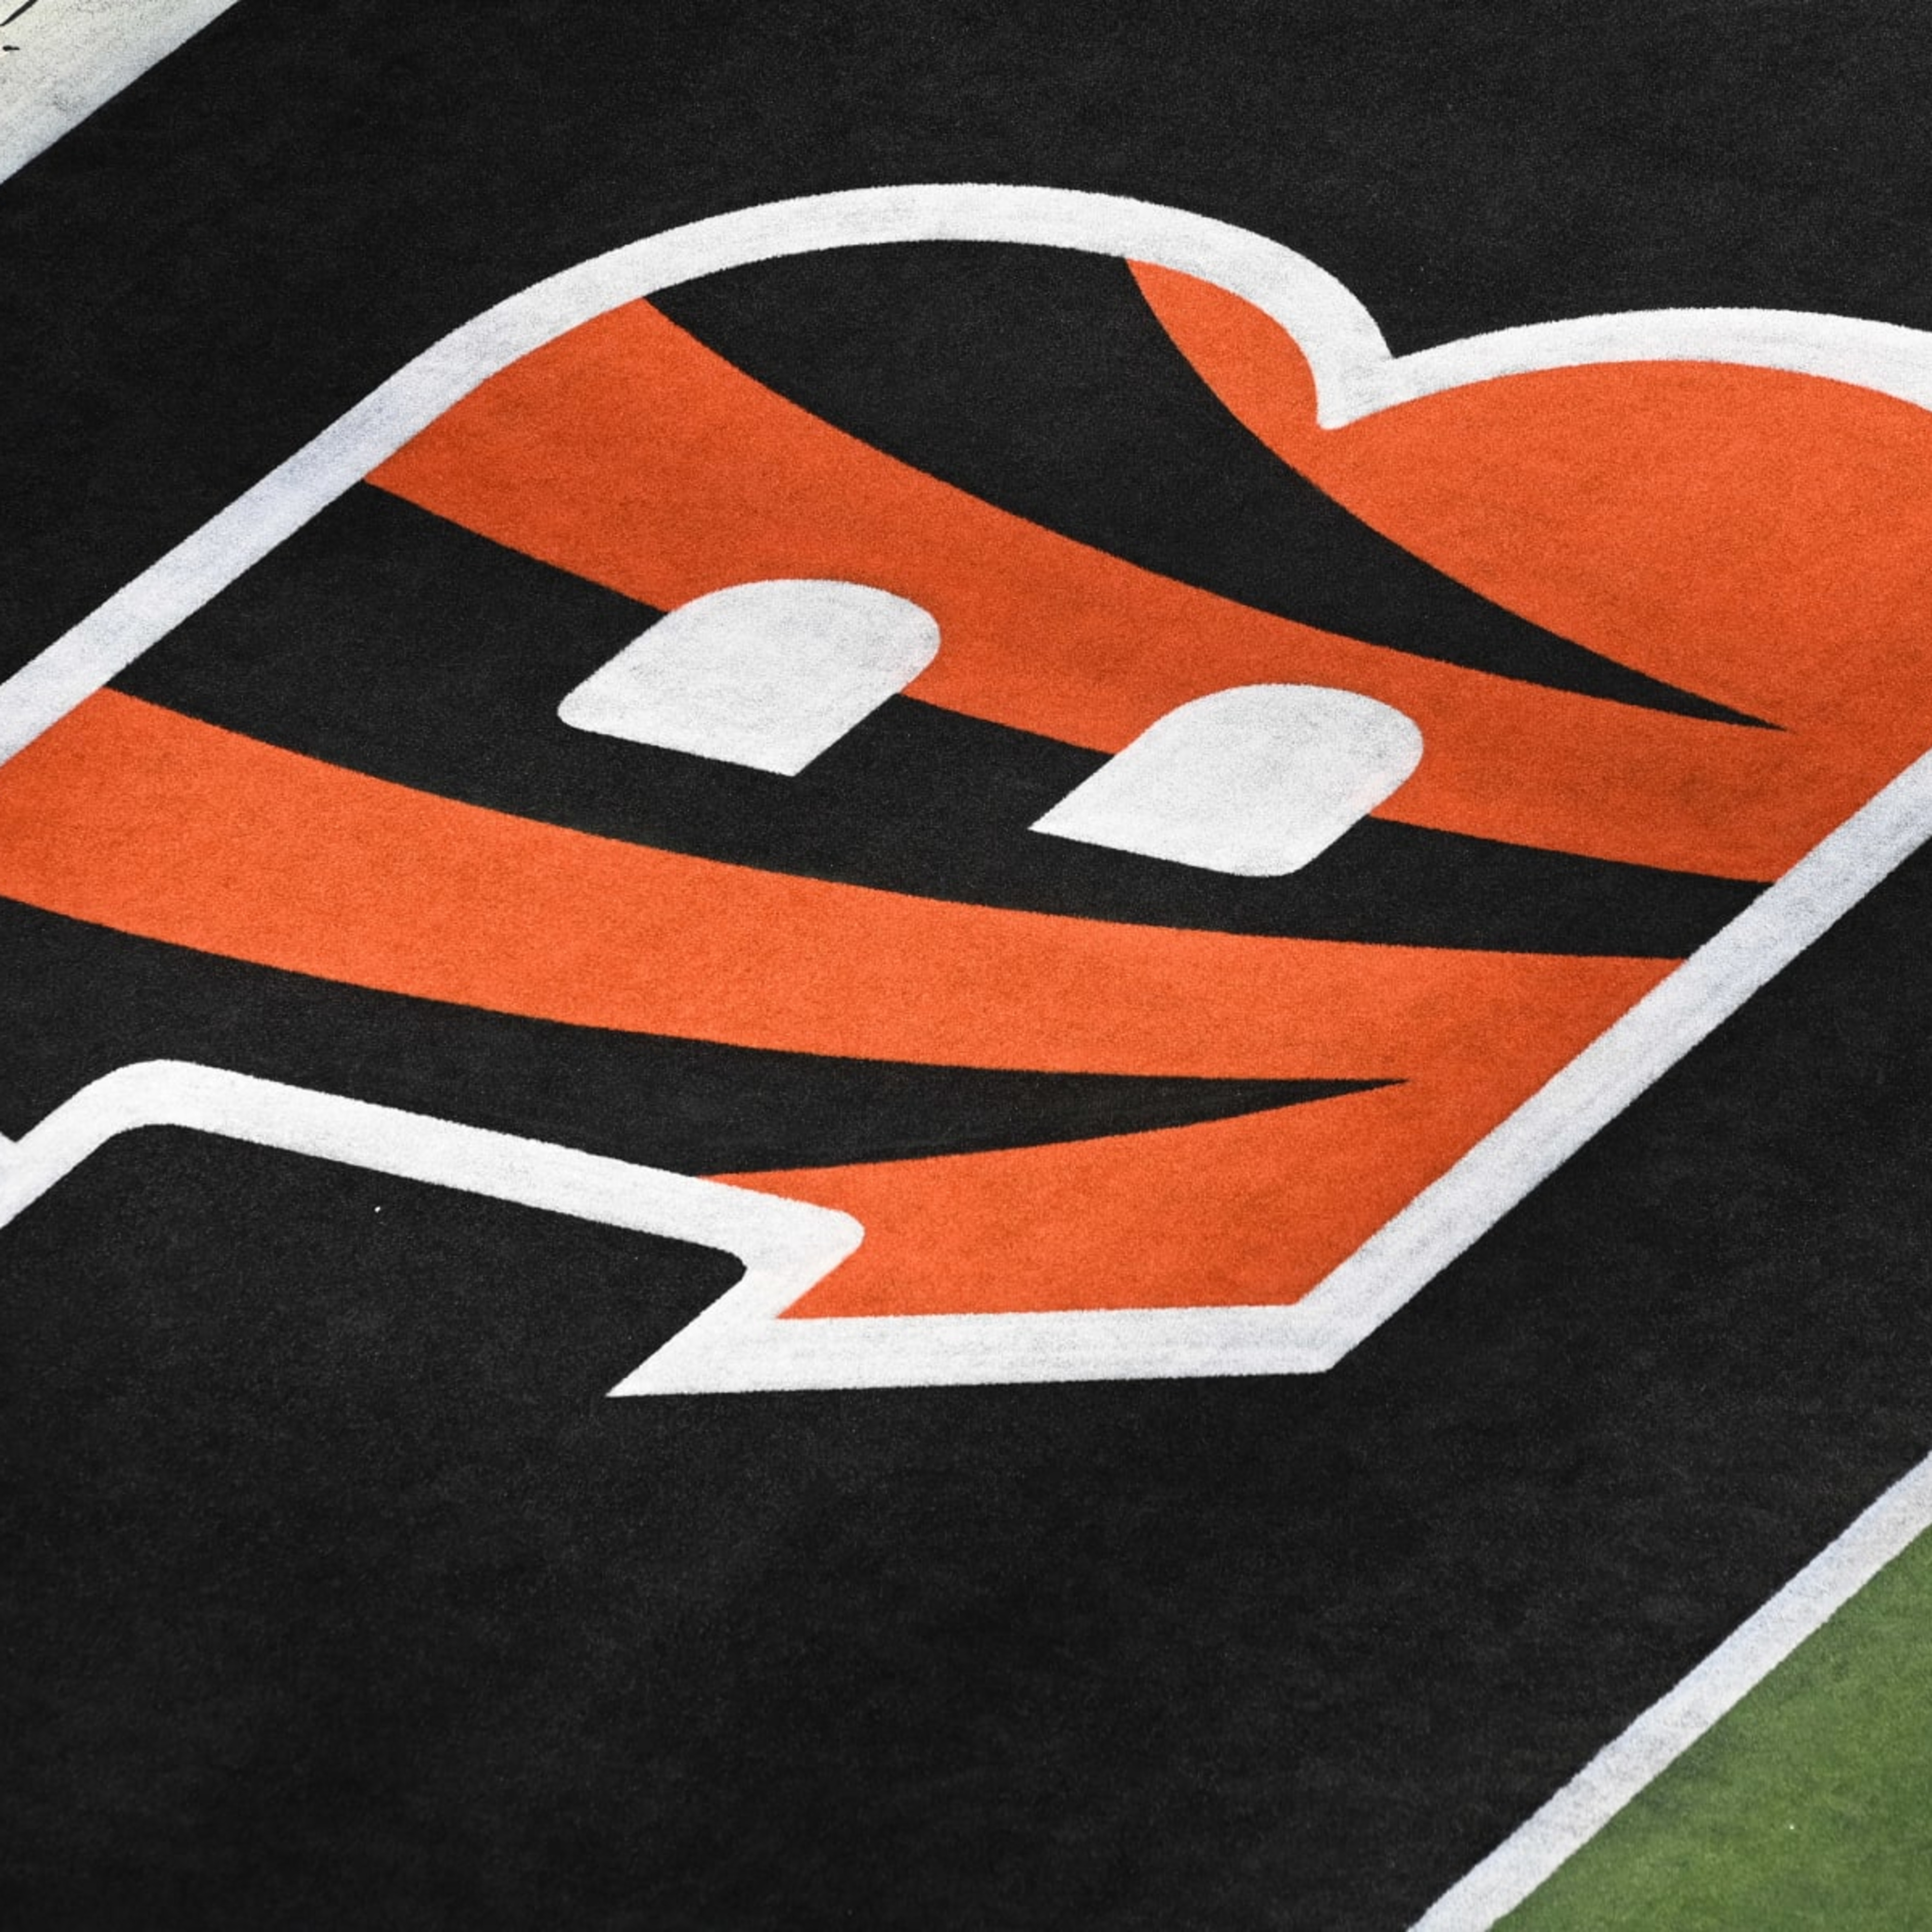 Report: Cincinnati Bengals Looking to Sell Naming Rights to Paul Brown Stadium